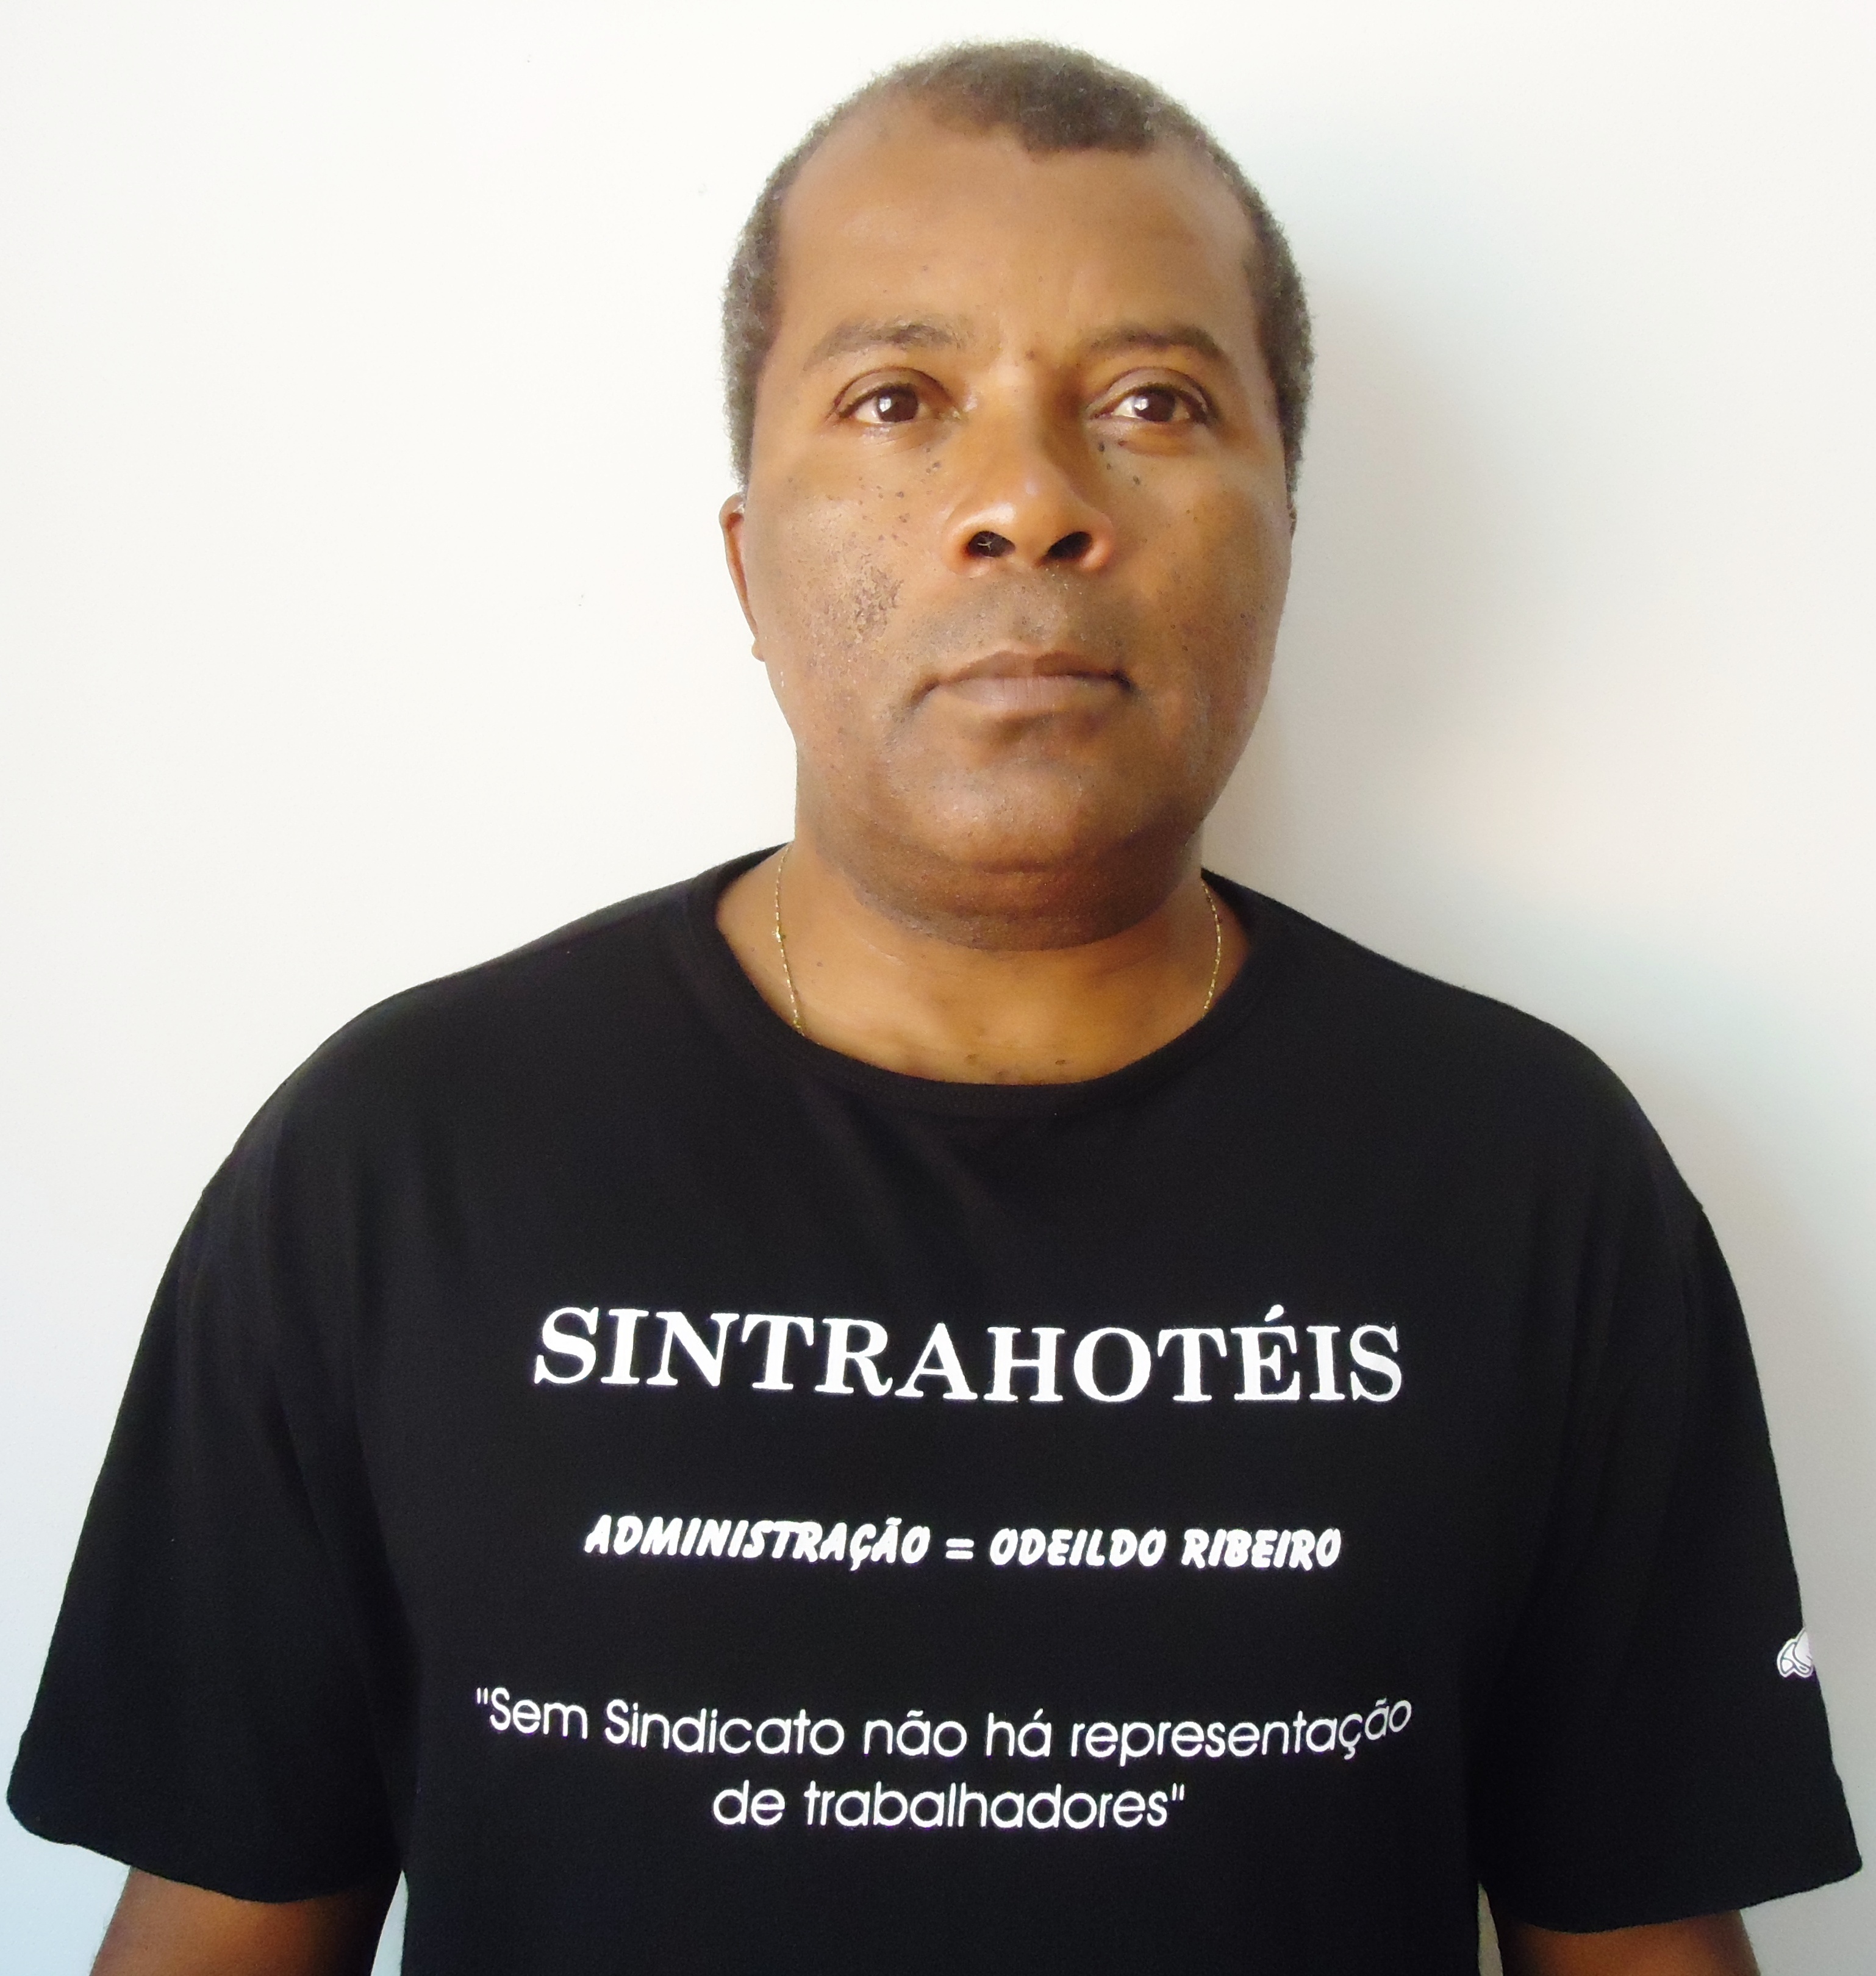 João Batista da Silva